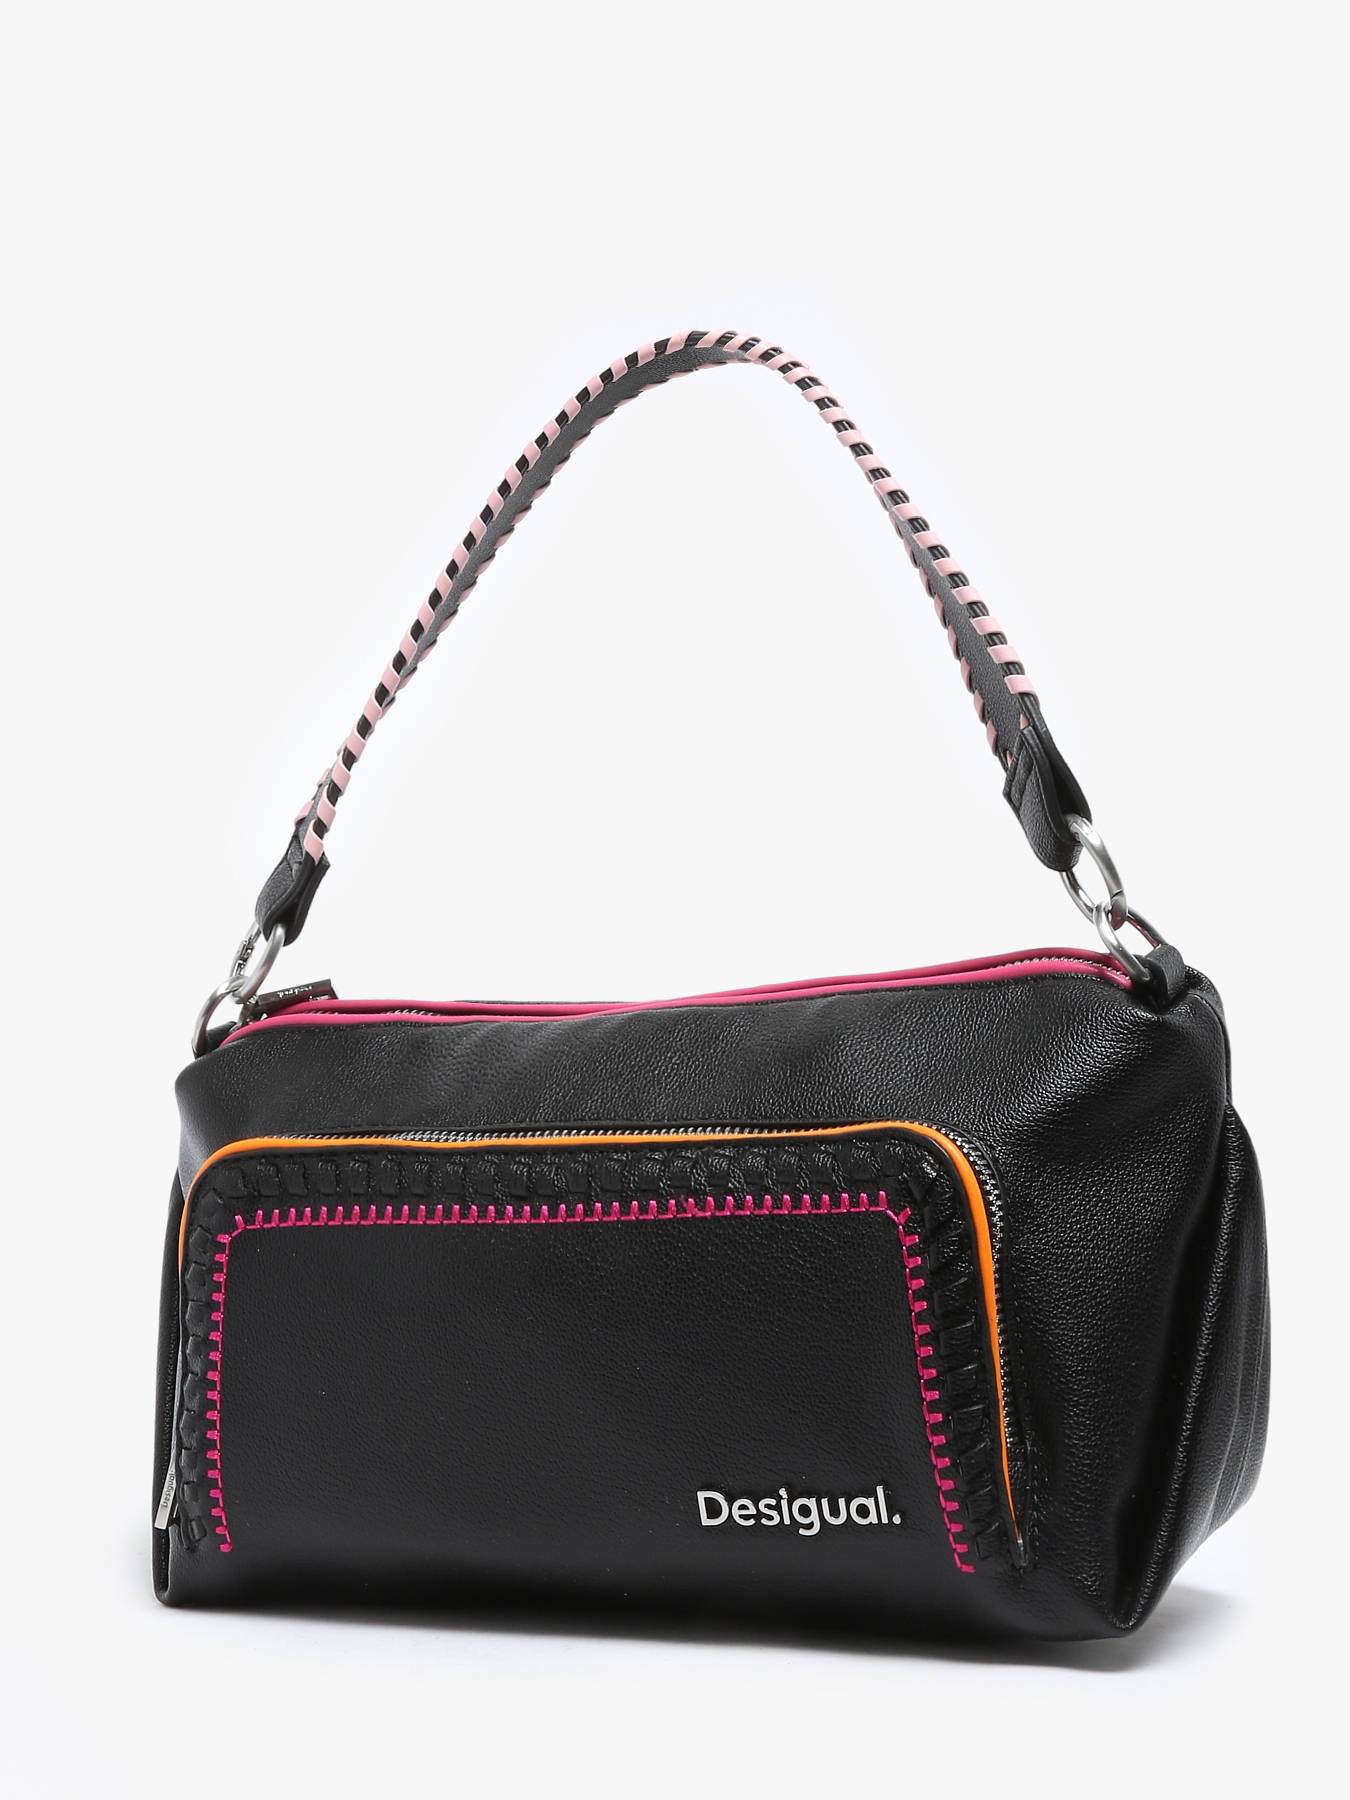 Desigual Shopping Bag, Black: Handbags: Amazon.com